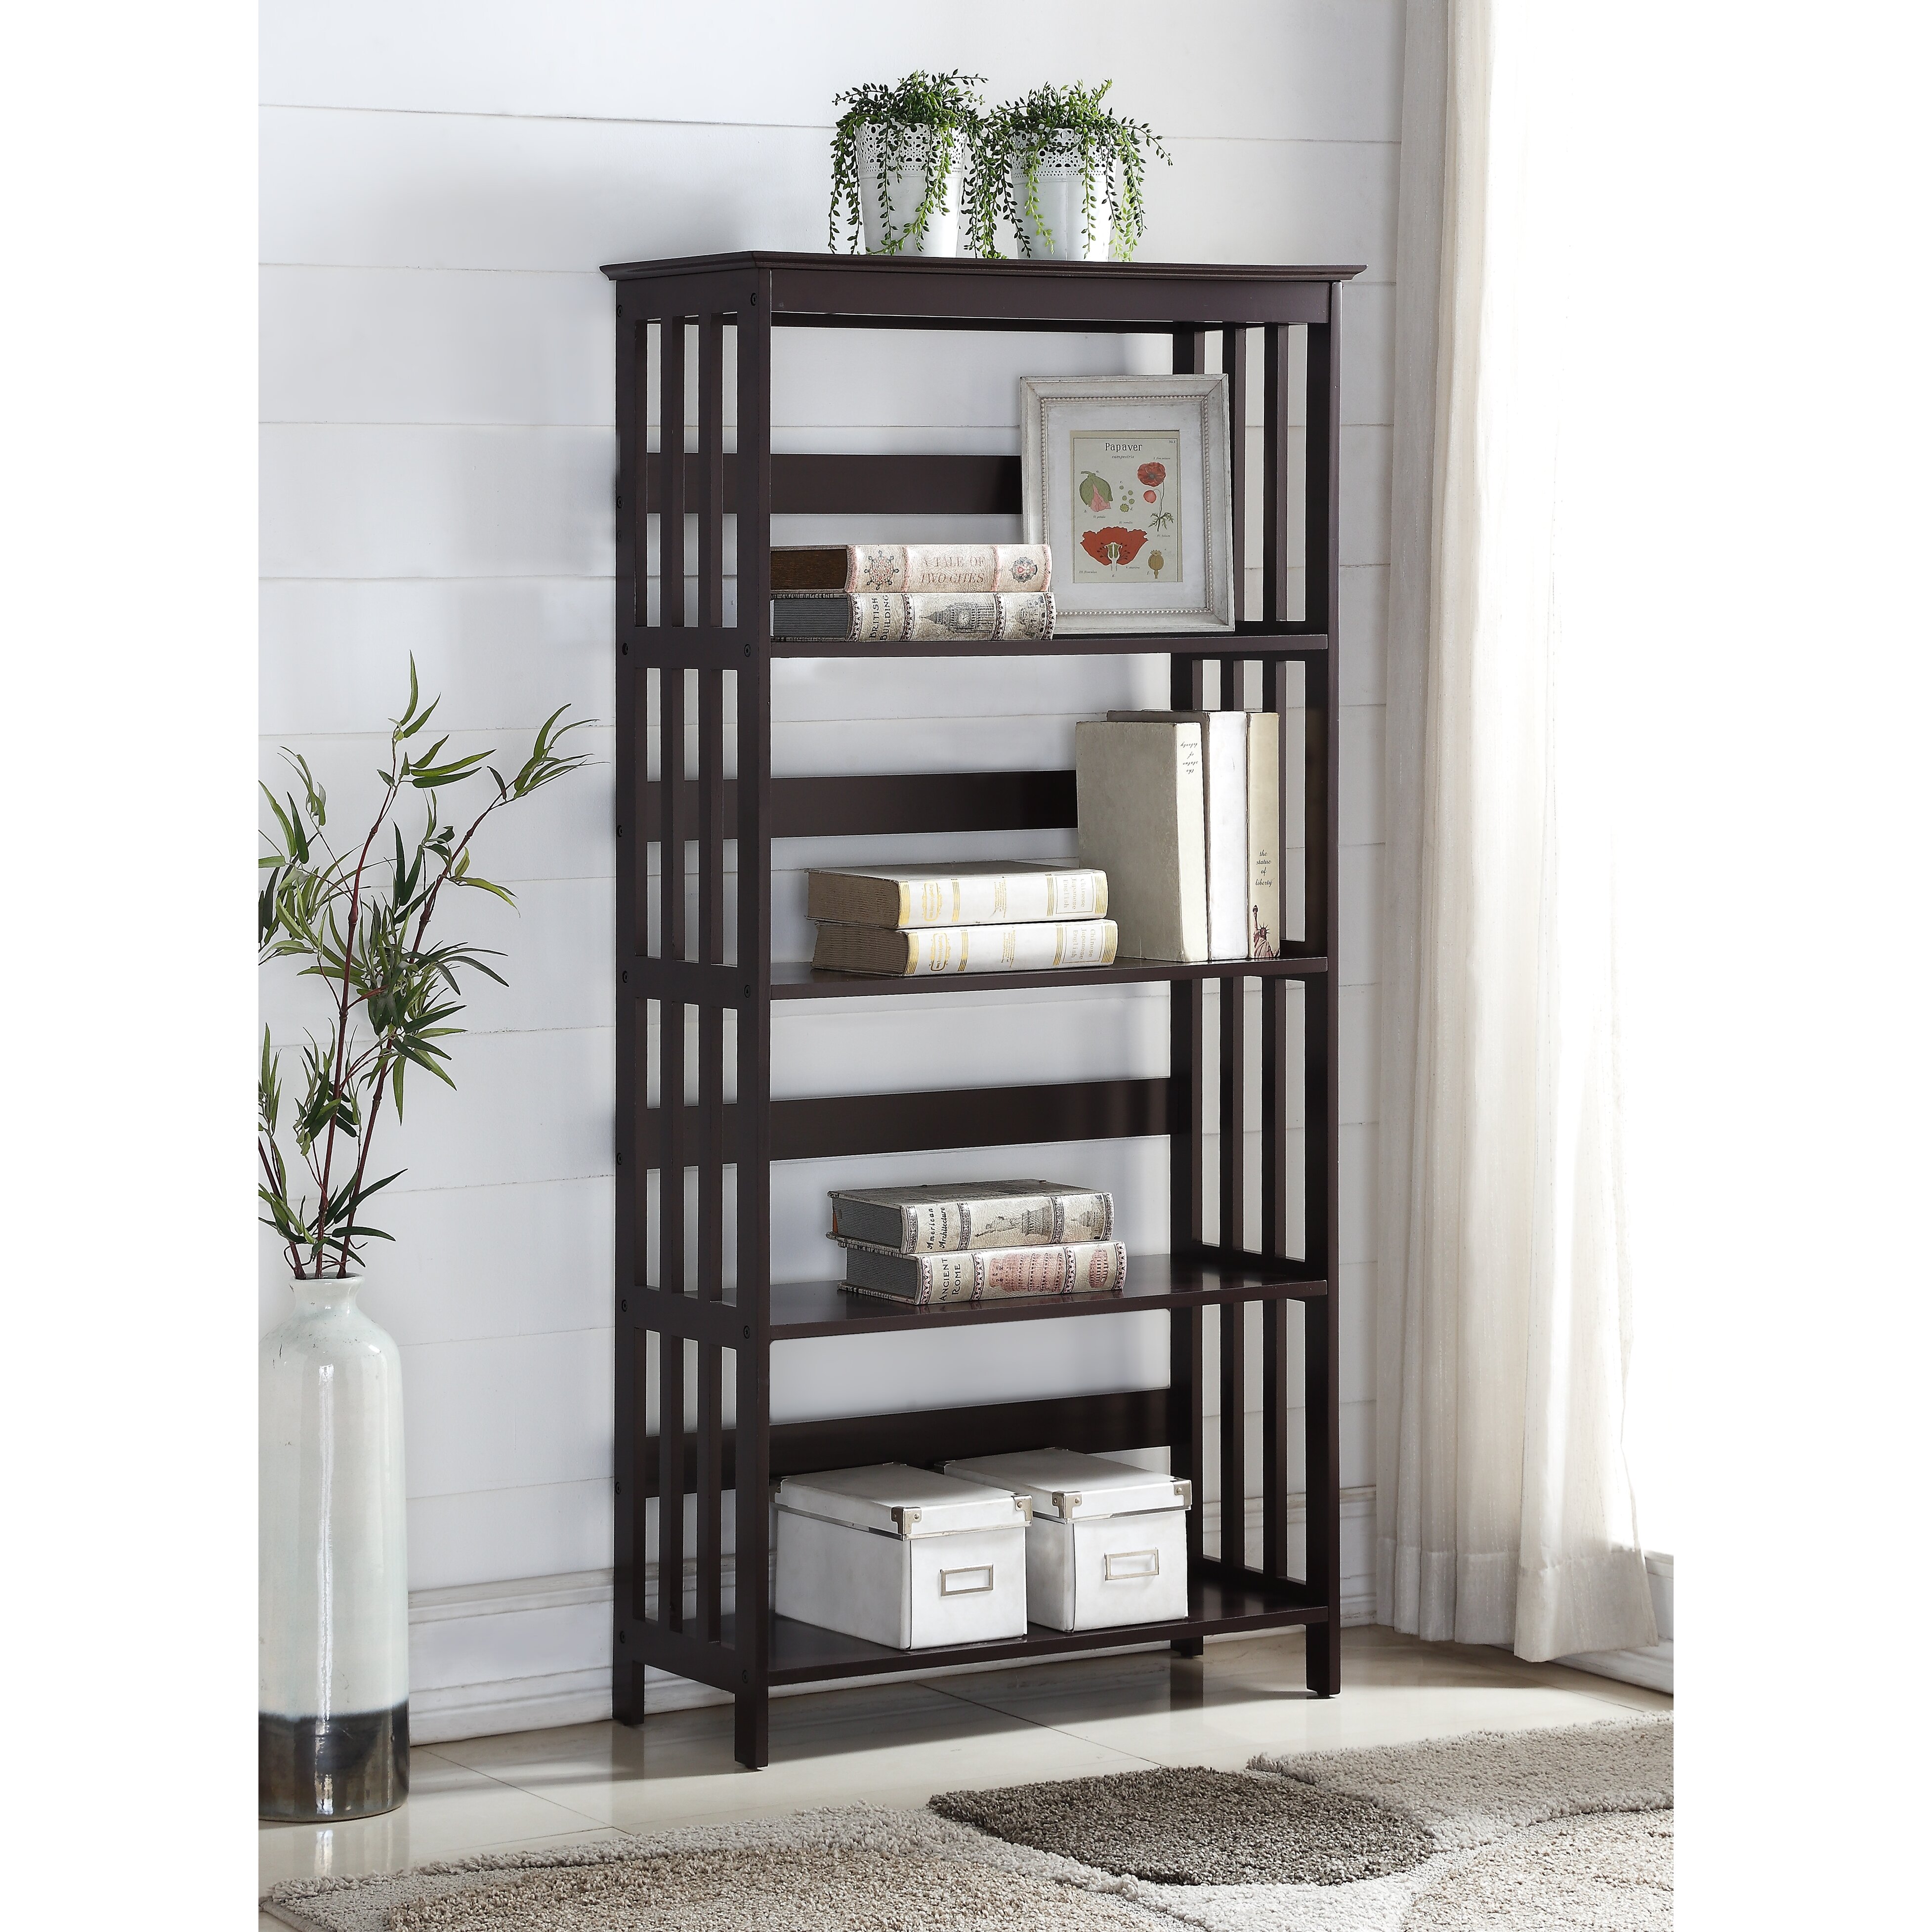 Unique Wayfair Bookcase for Living room